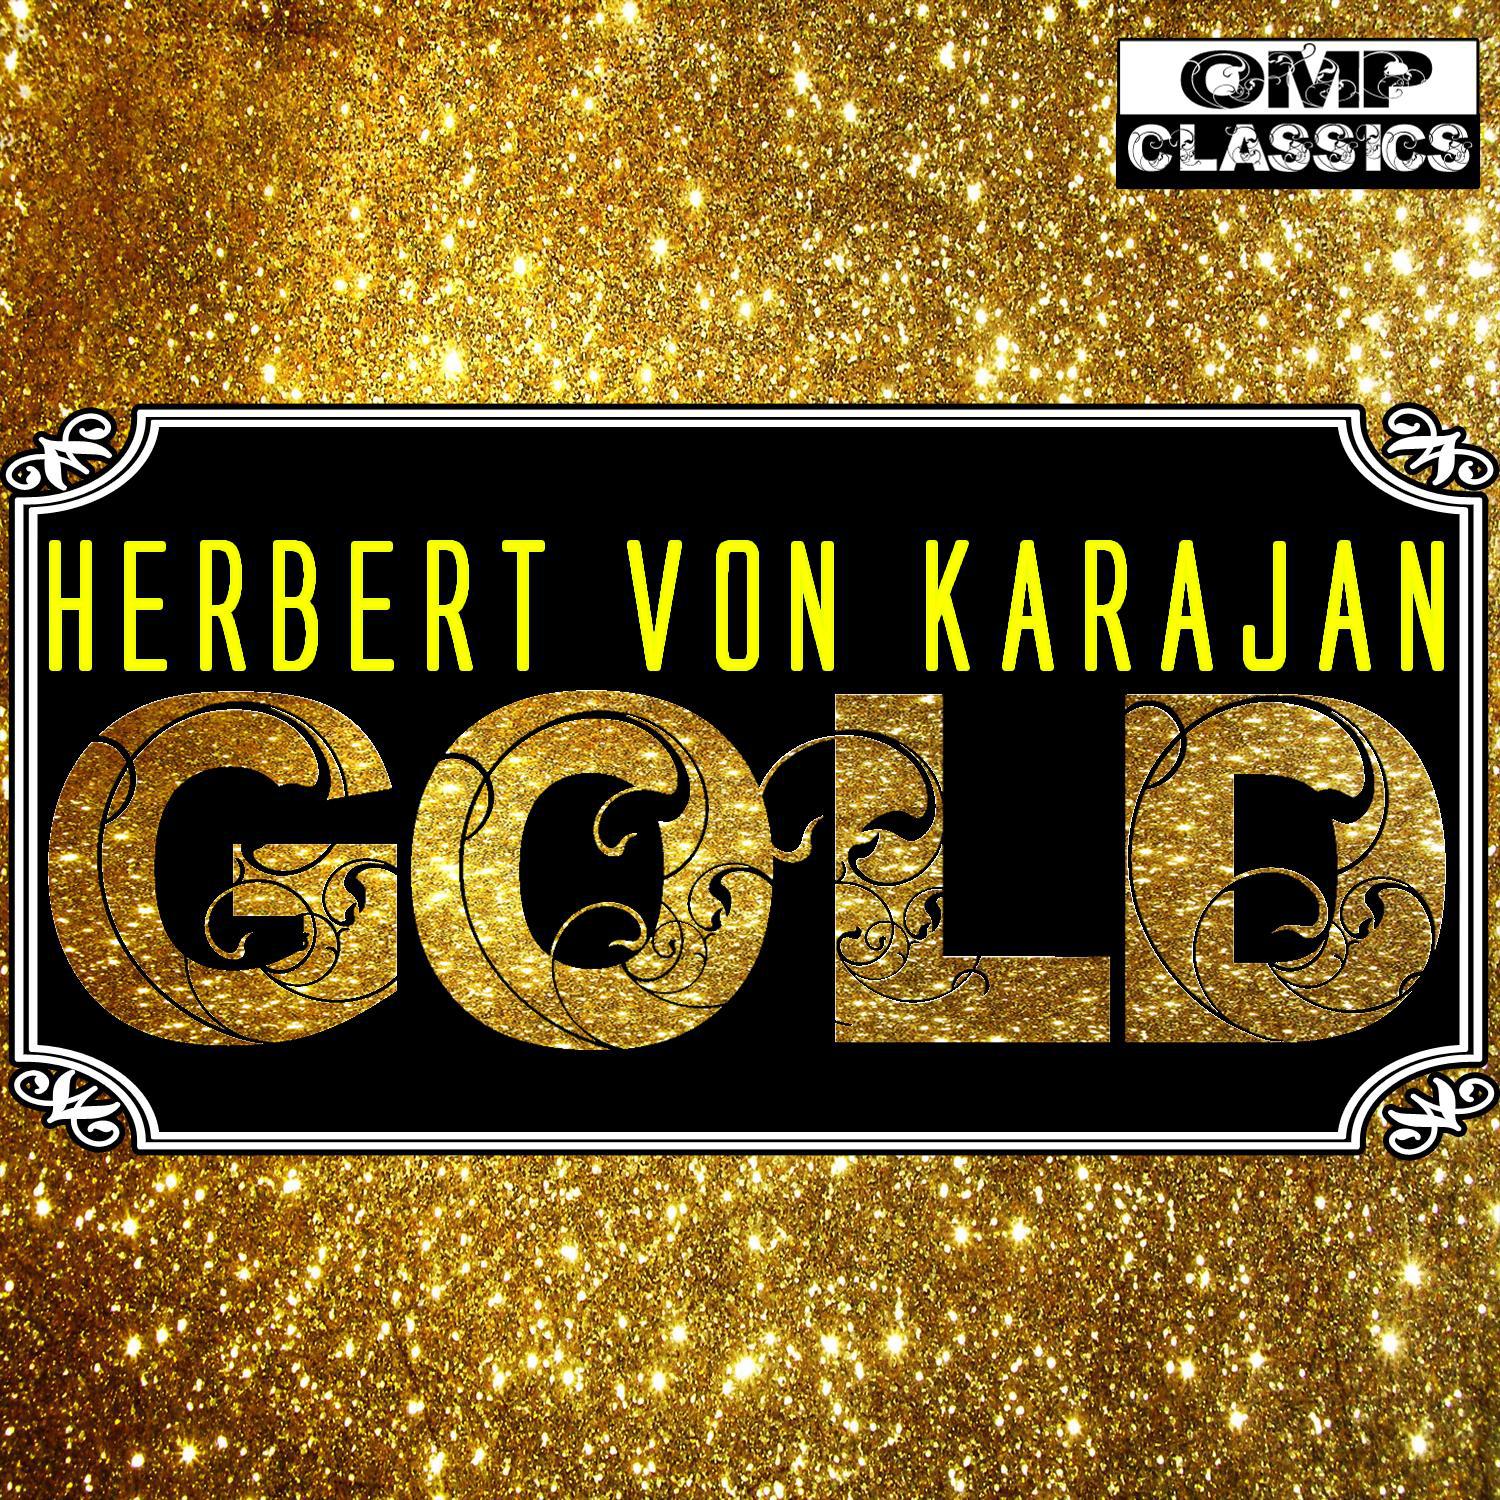 Herbert von Karajan Gold